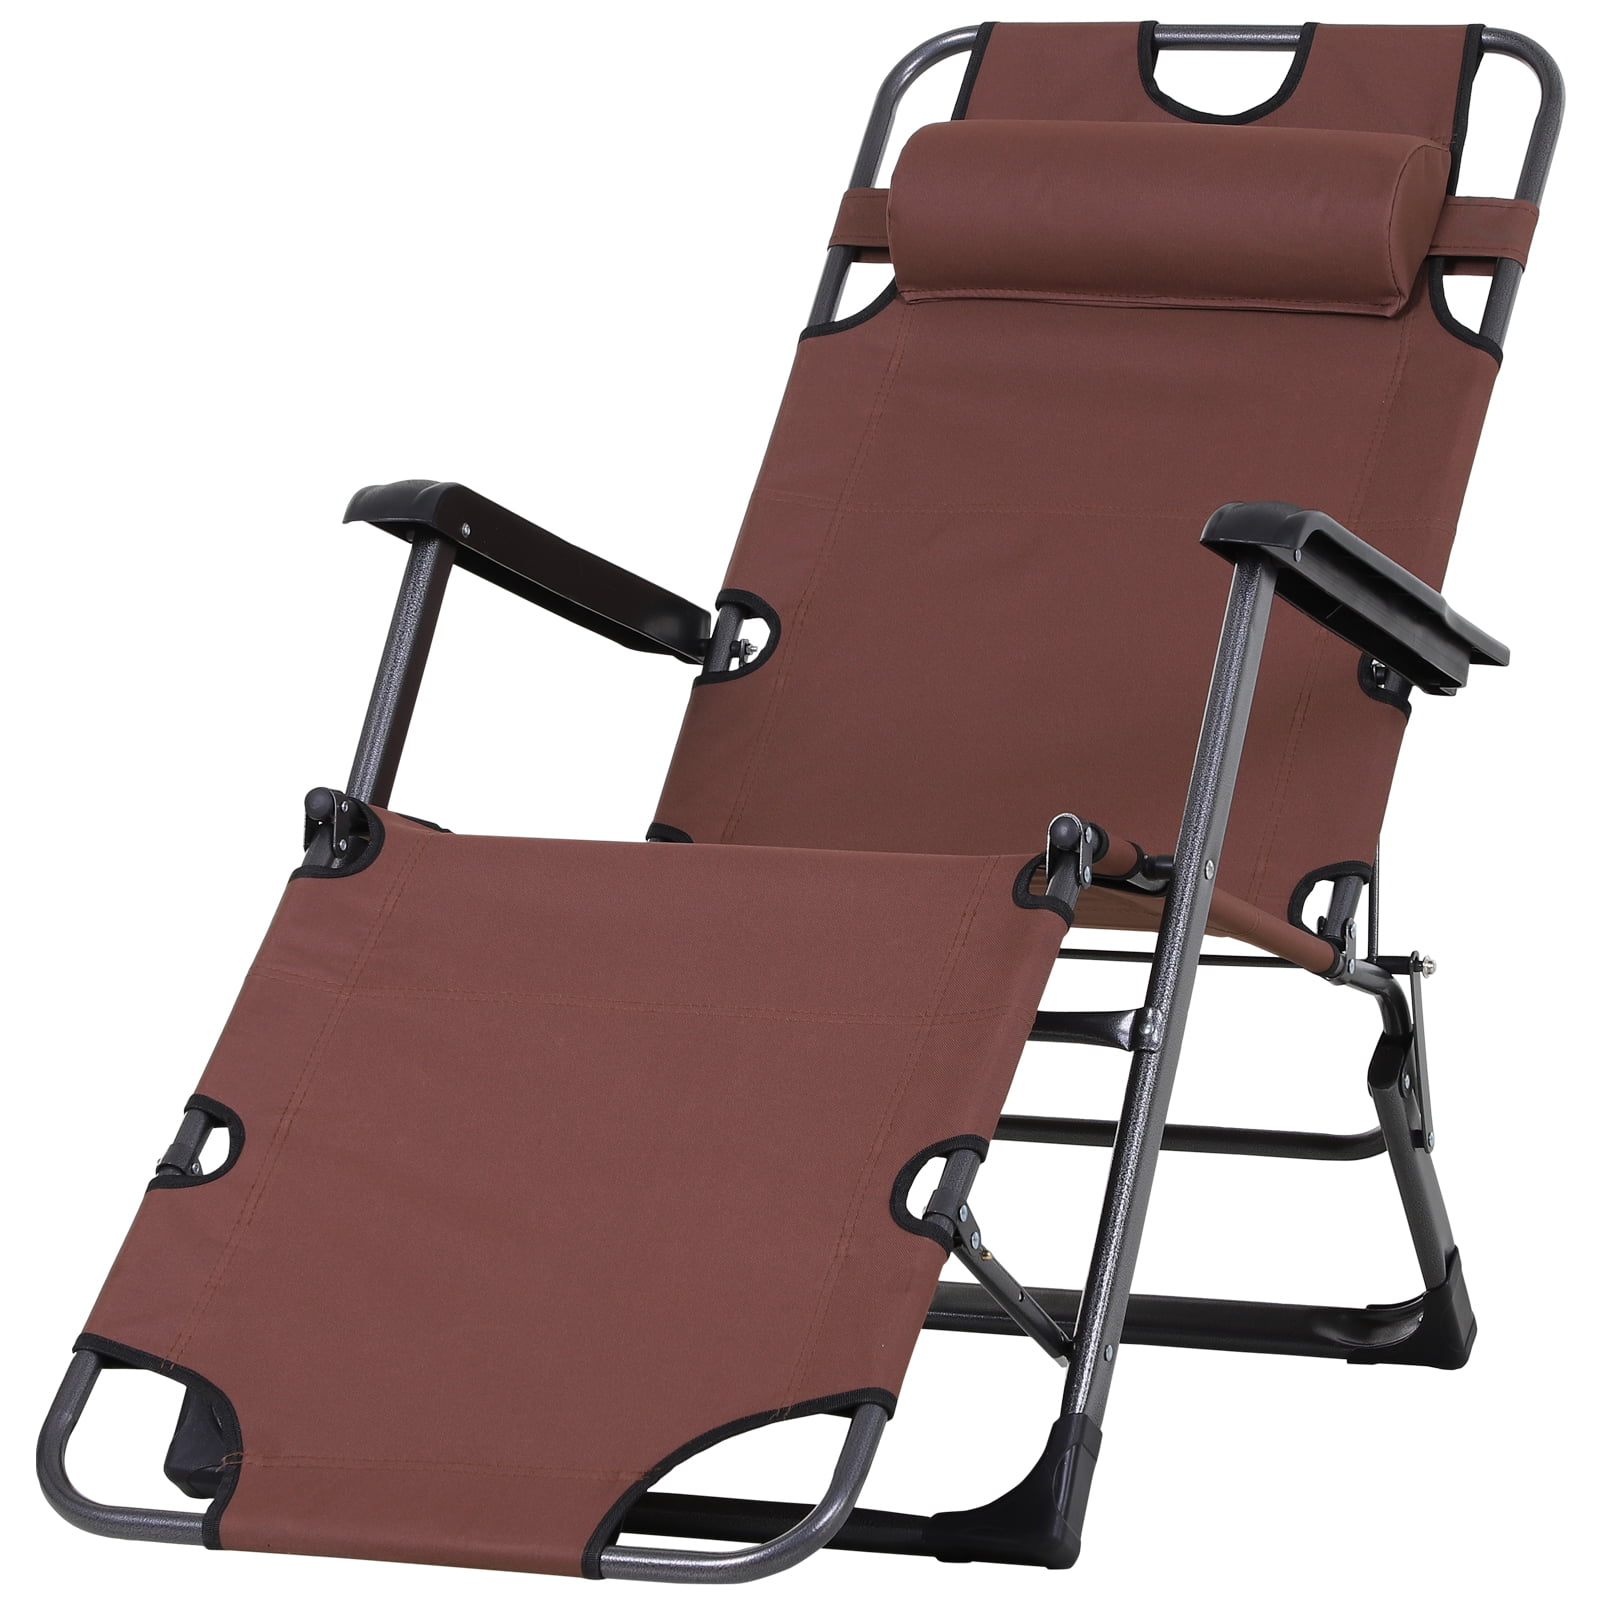 Reclining Outdoor Sun Loungers Camping Chair Folding Recliner Relaxer Chairs for Patio Decking Gardens（Grey） HanTen Zero Gravity Recliners